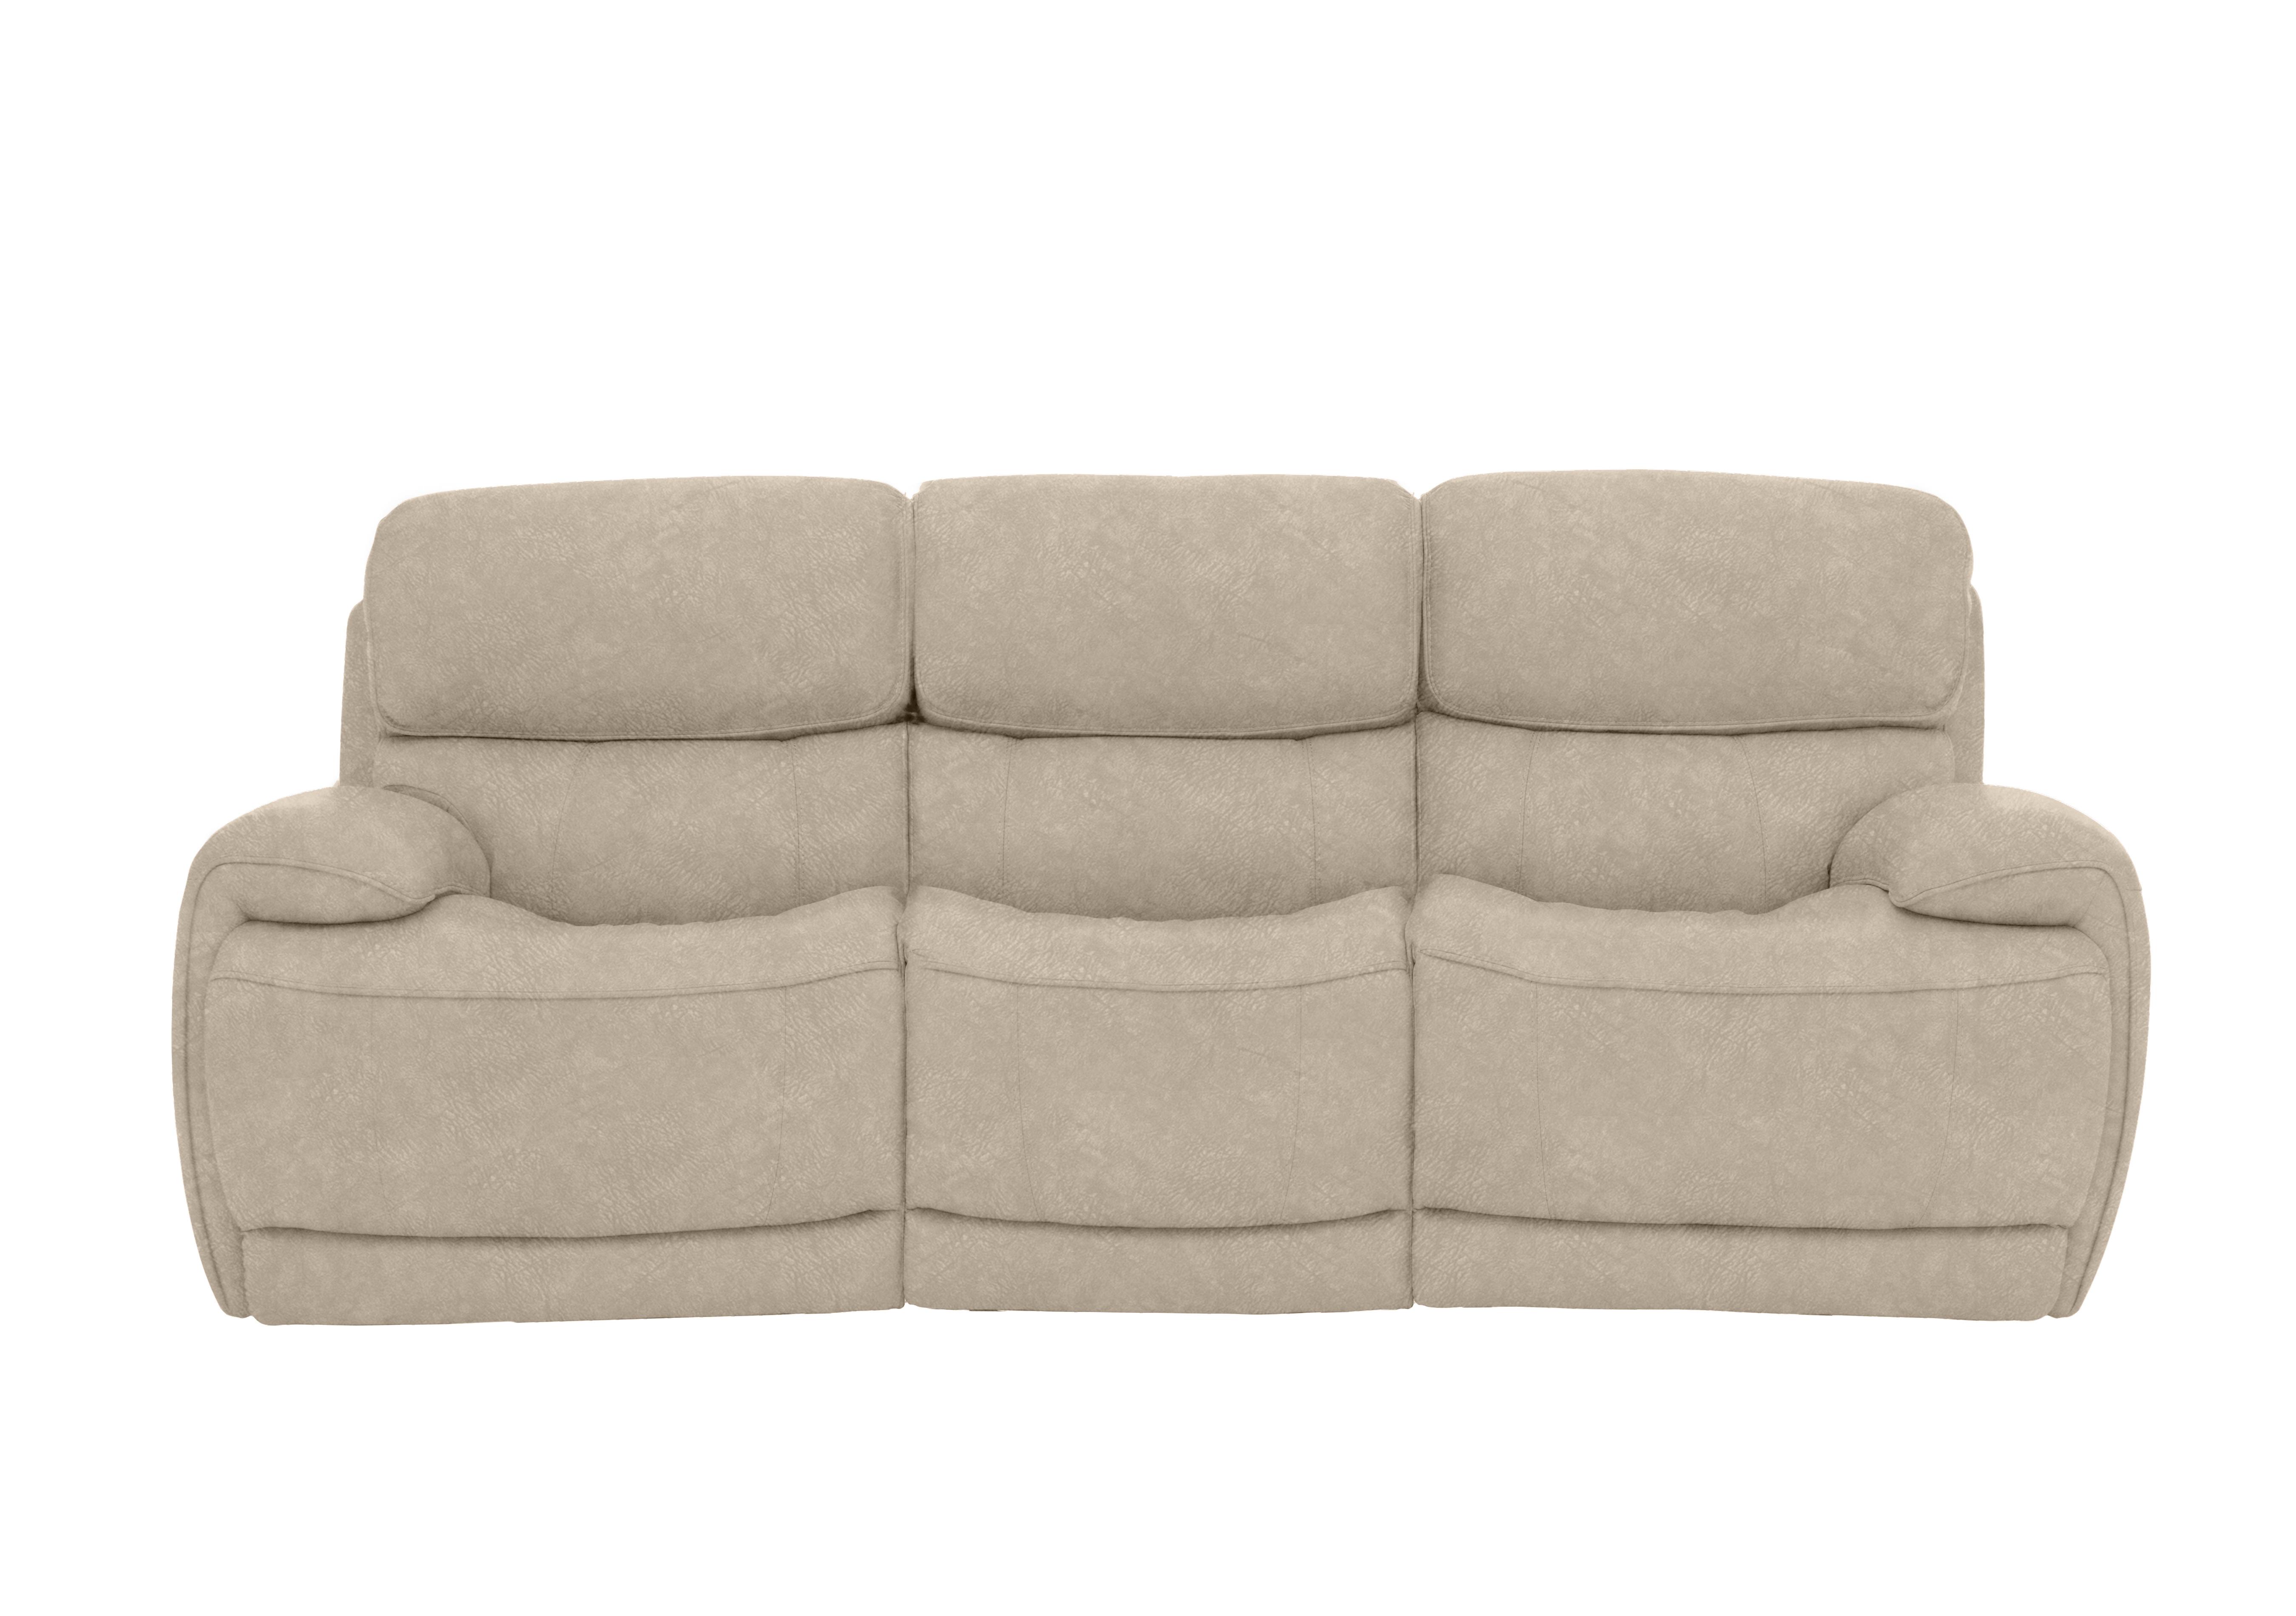 Rocco 3 Seater Fabric Power Rocker Sofa with Power Headrests in Bfa-Bnn-R26 Fv2 Cream on Furniture Village